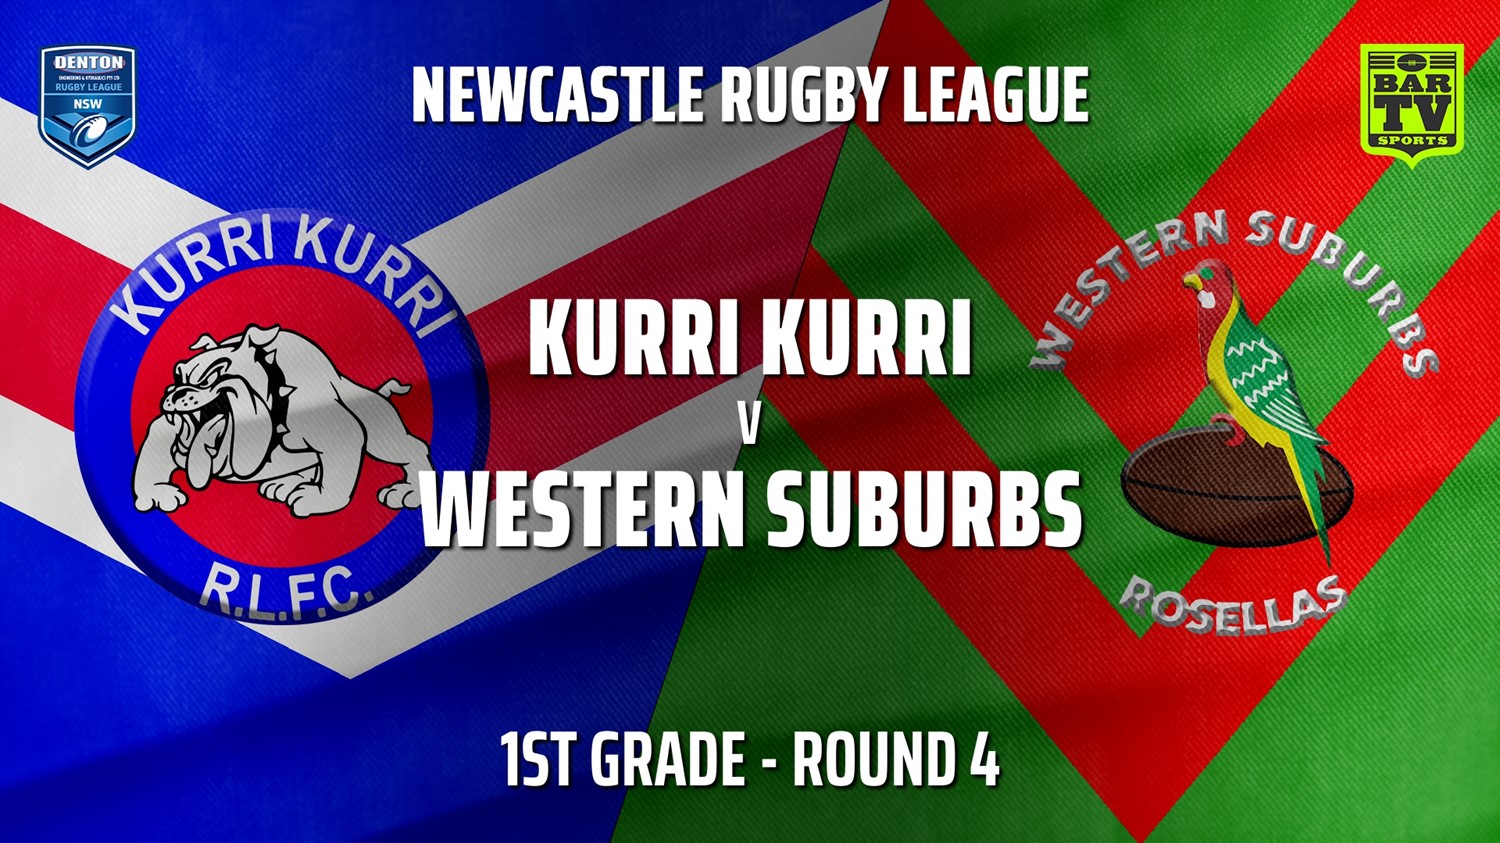 Newcastle Rugby League Round 4 - 1st Grade - Kurri Kurri Bulldogs v Western Suburbs Rosellas Slate Image